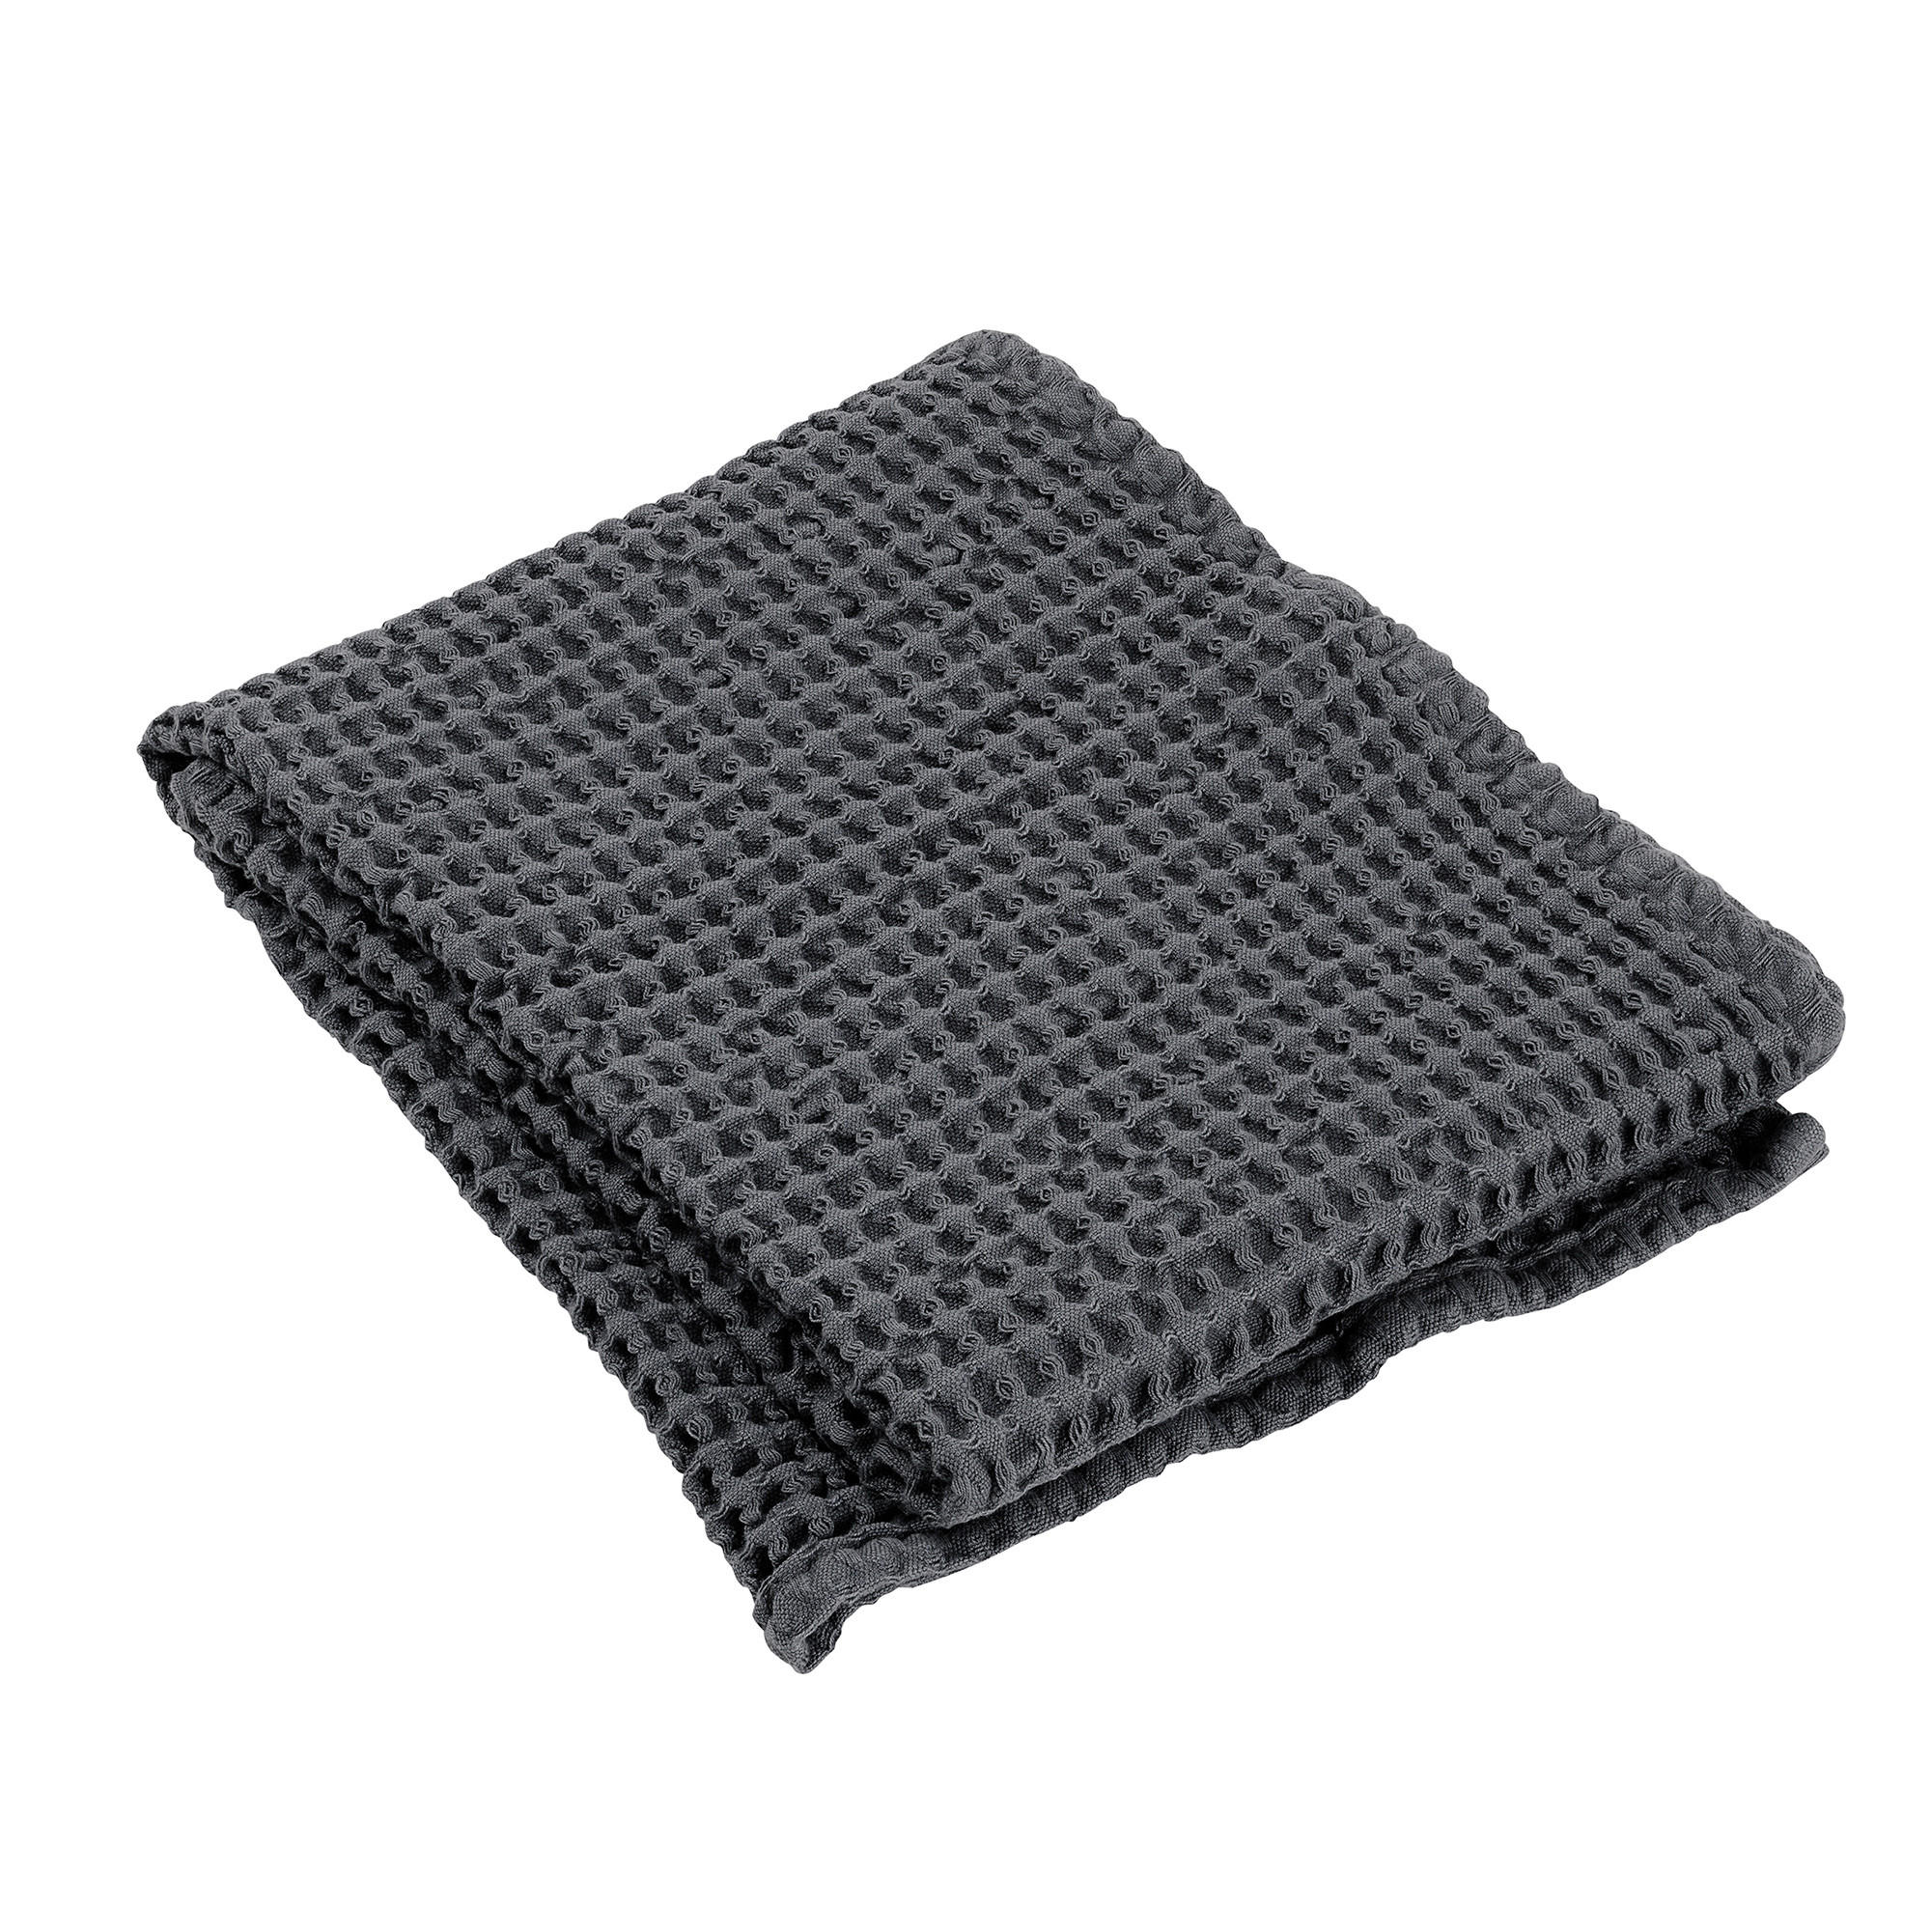 HANDTUCH CARO  - Anthrazit, Design, Textil (100,0/50,0cm) - Blomus